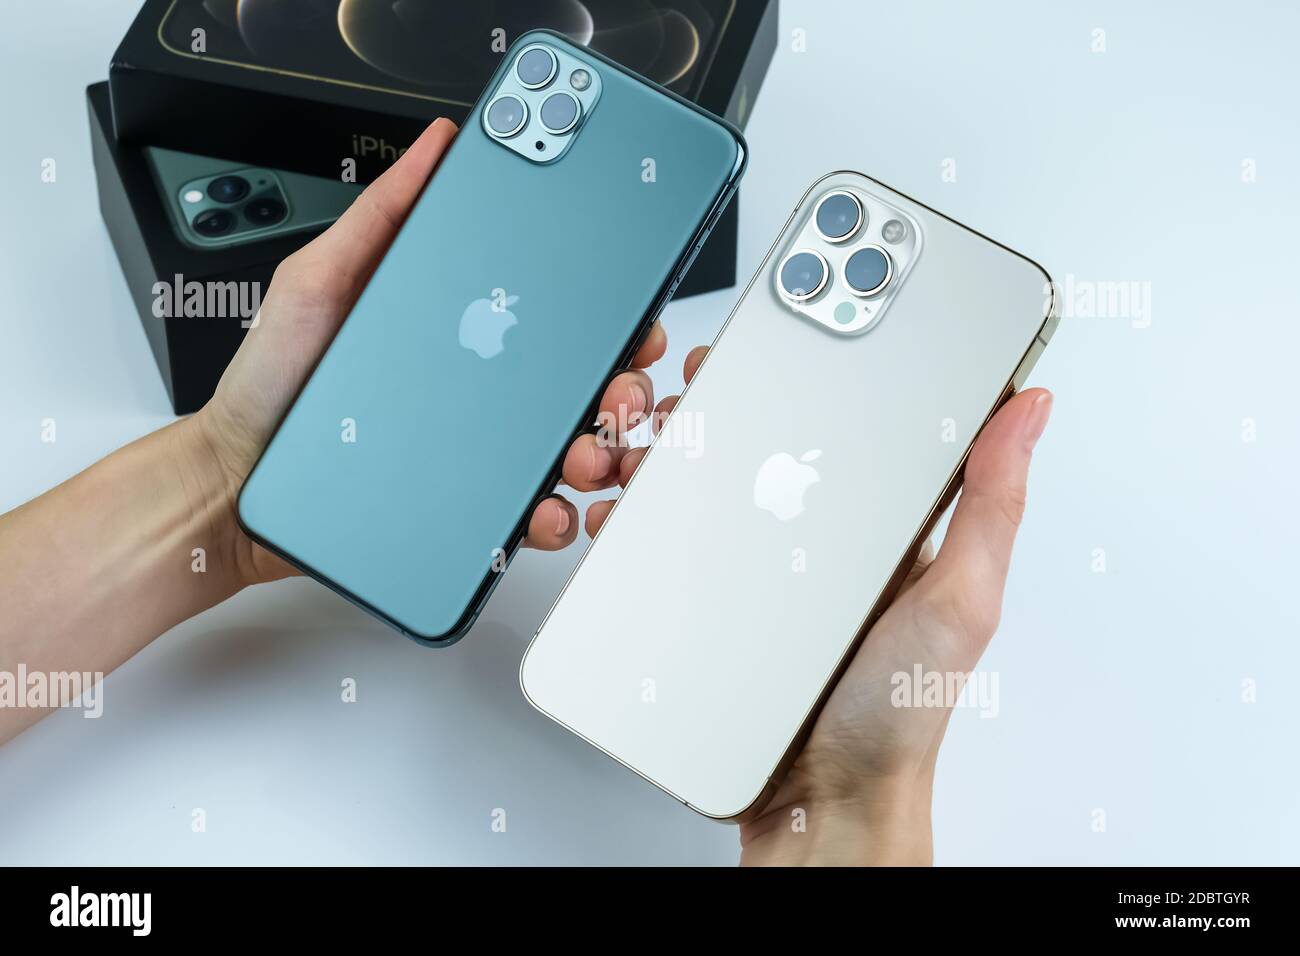 IPhone 12 Pro Max in oro accanto a iPhone 11 Pro Max in colore Midnight  Green Foto stock - Alamy